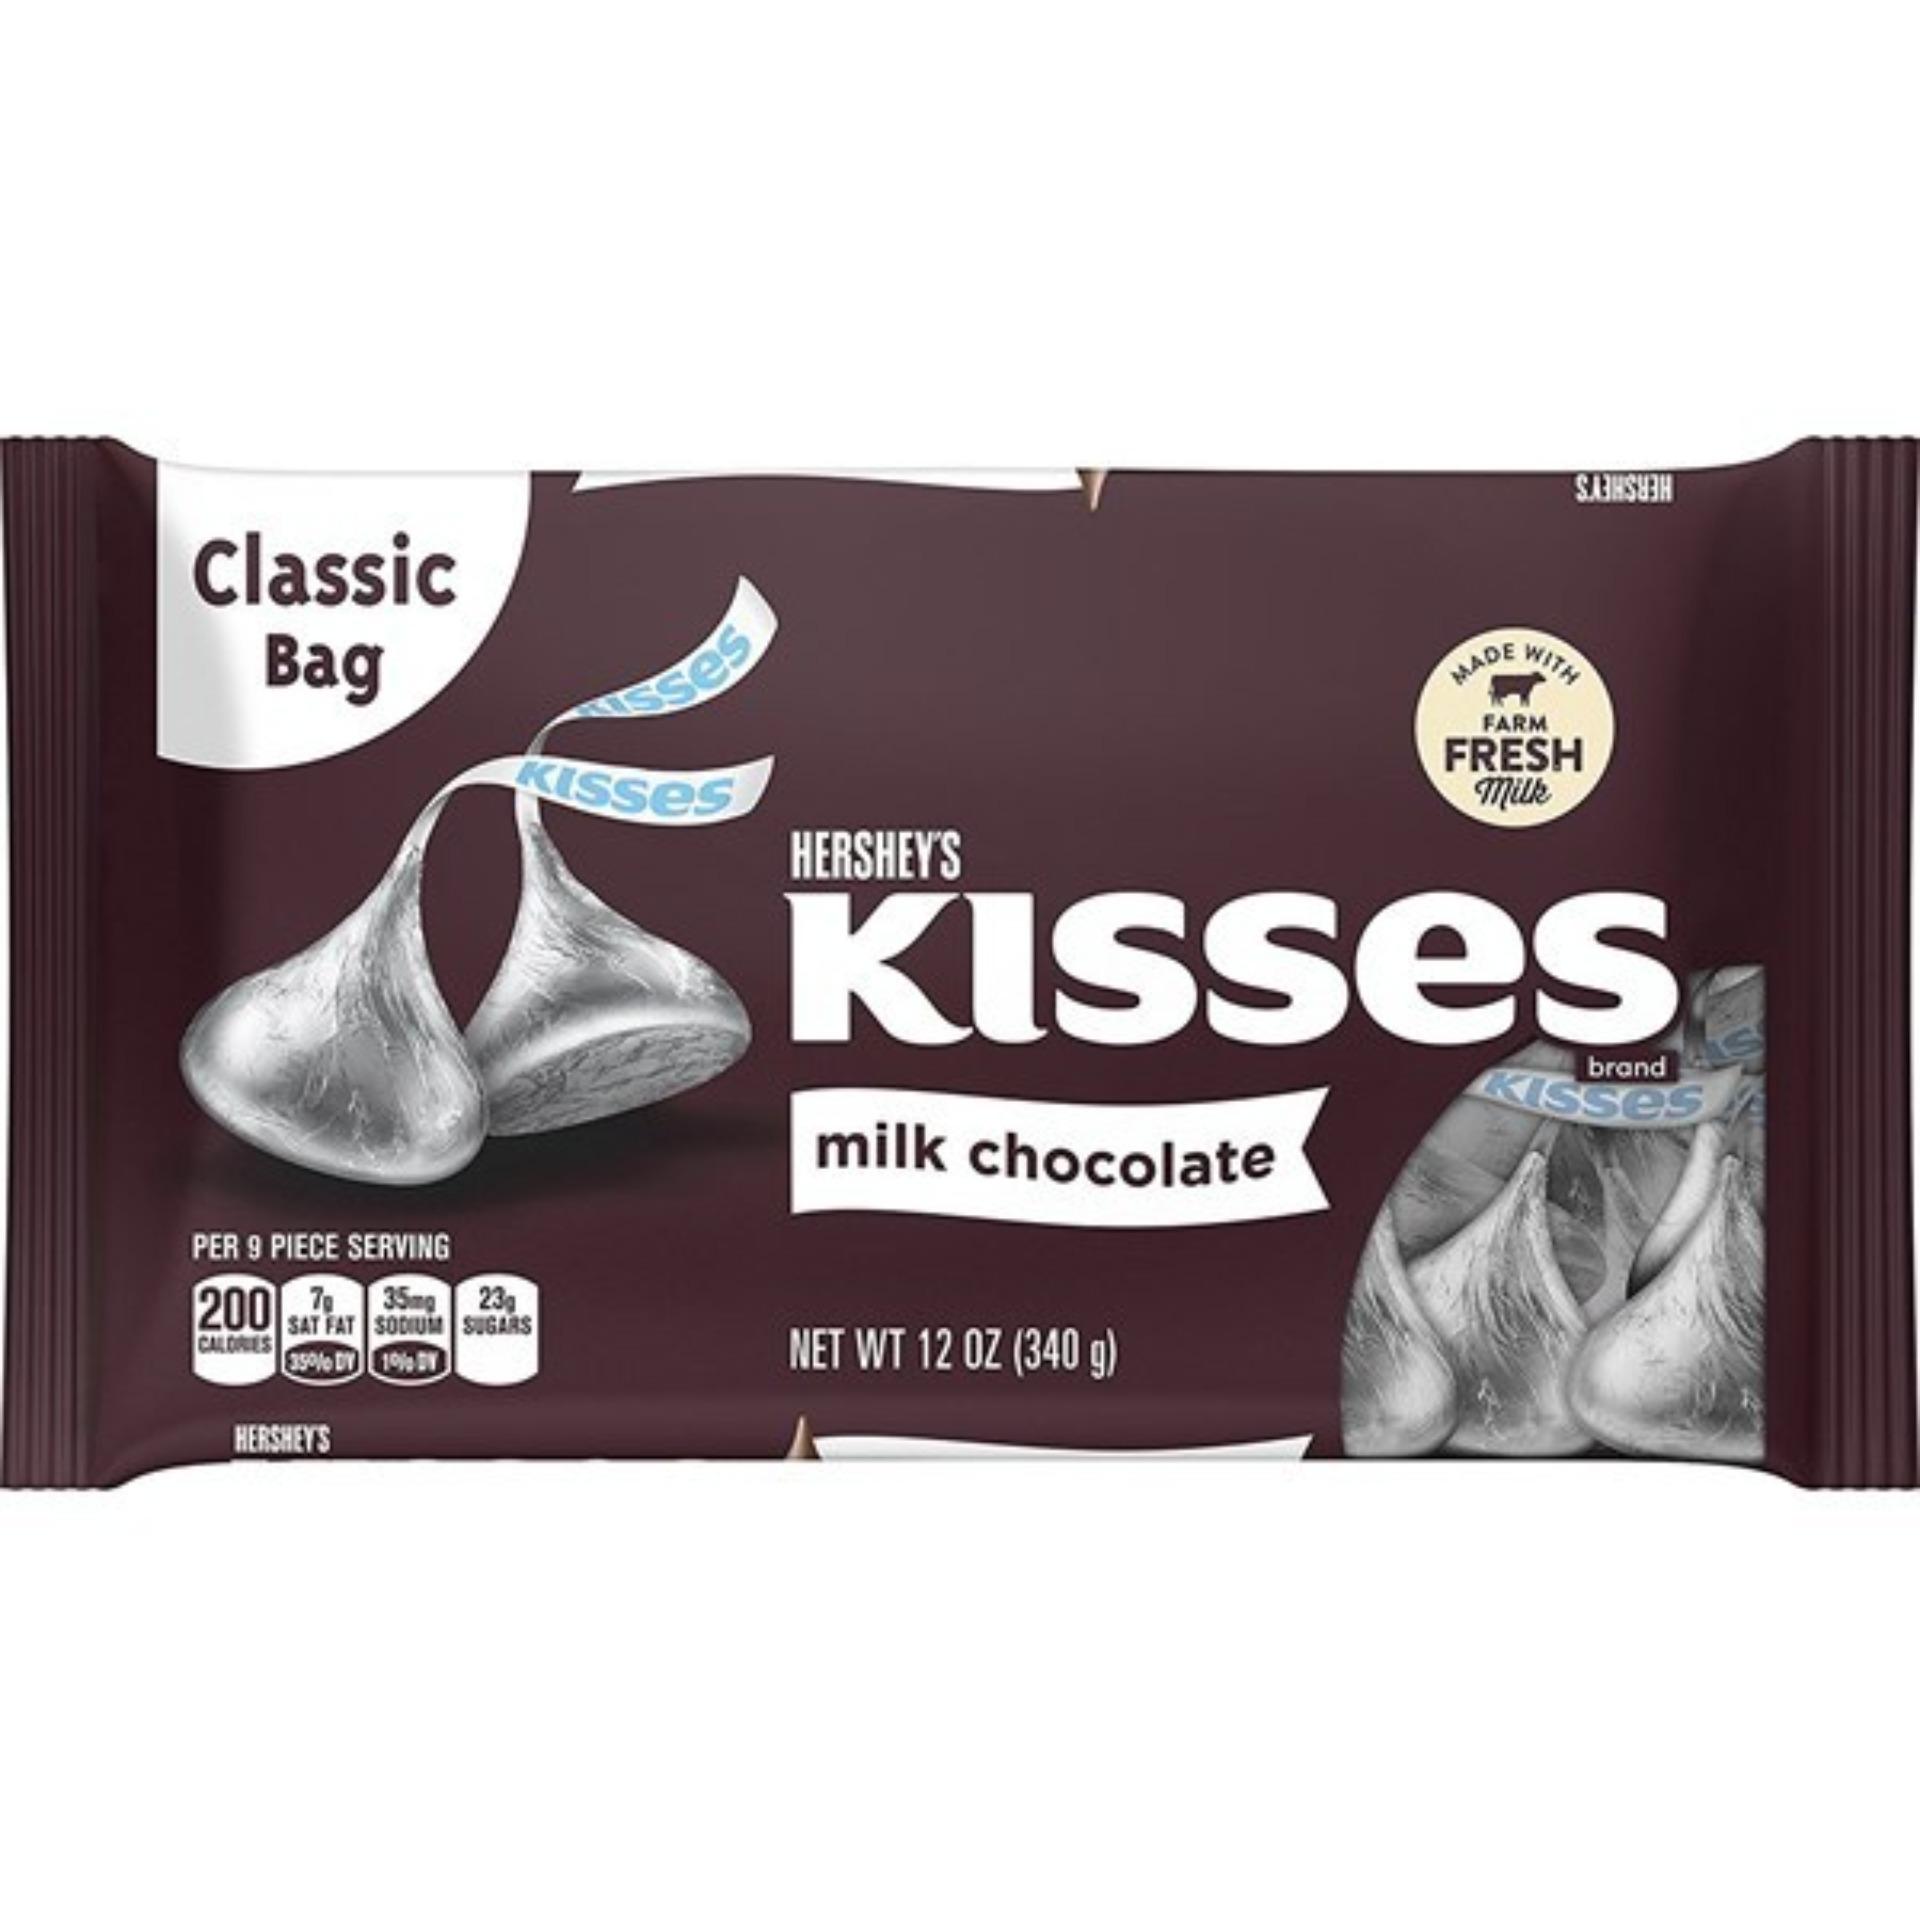 Socola Hershey's Kisses Milk Chocolate USA 340g